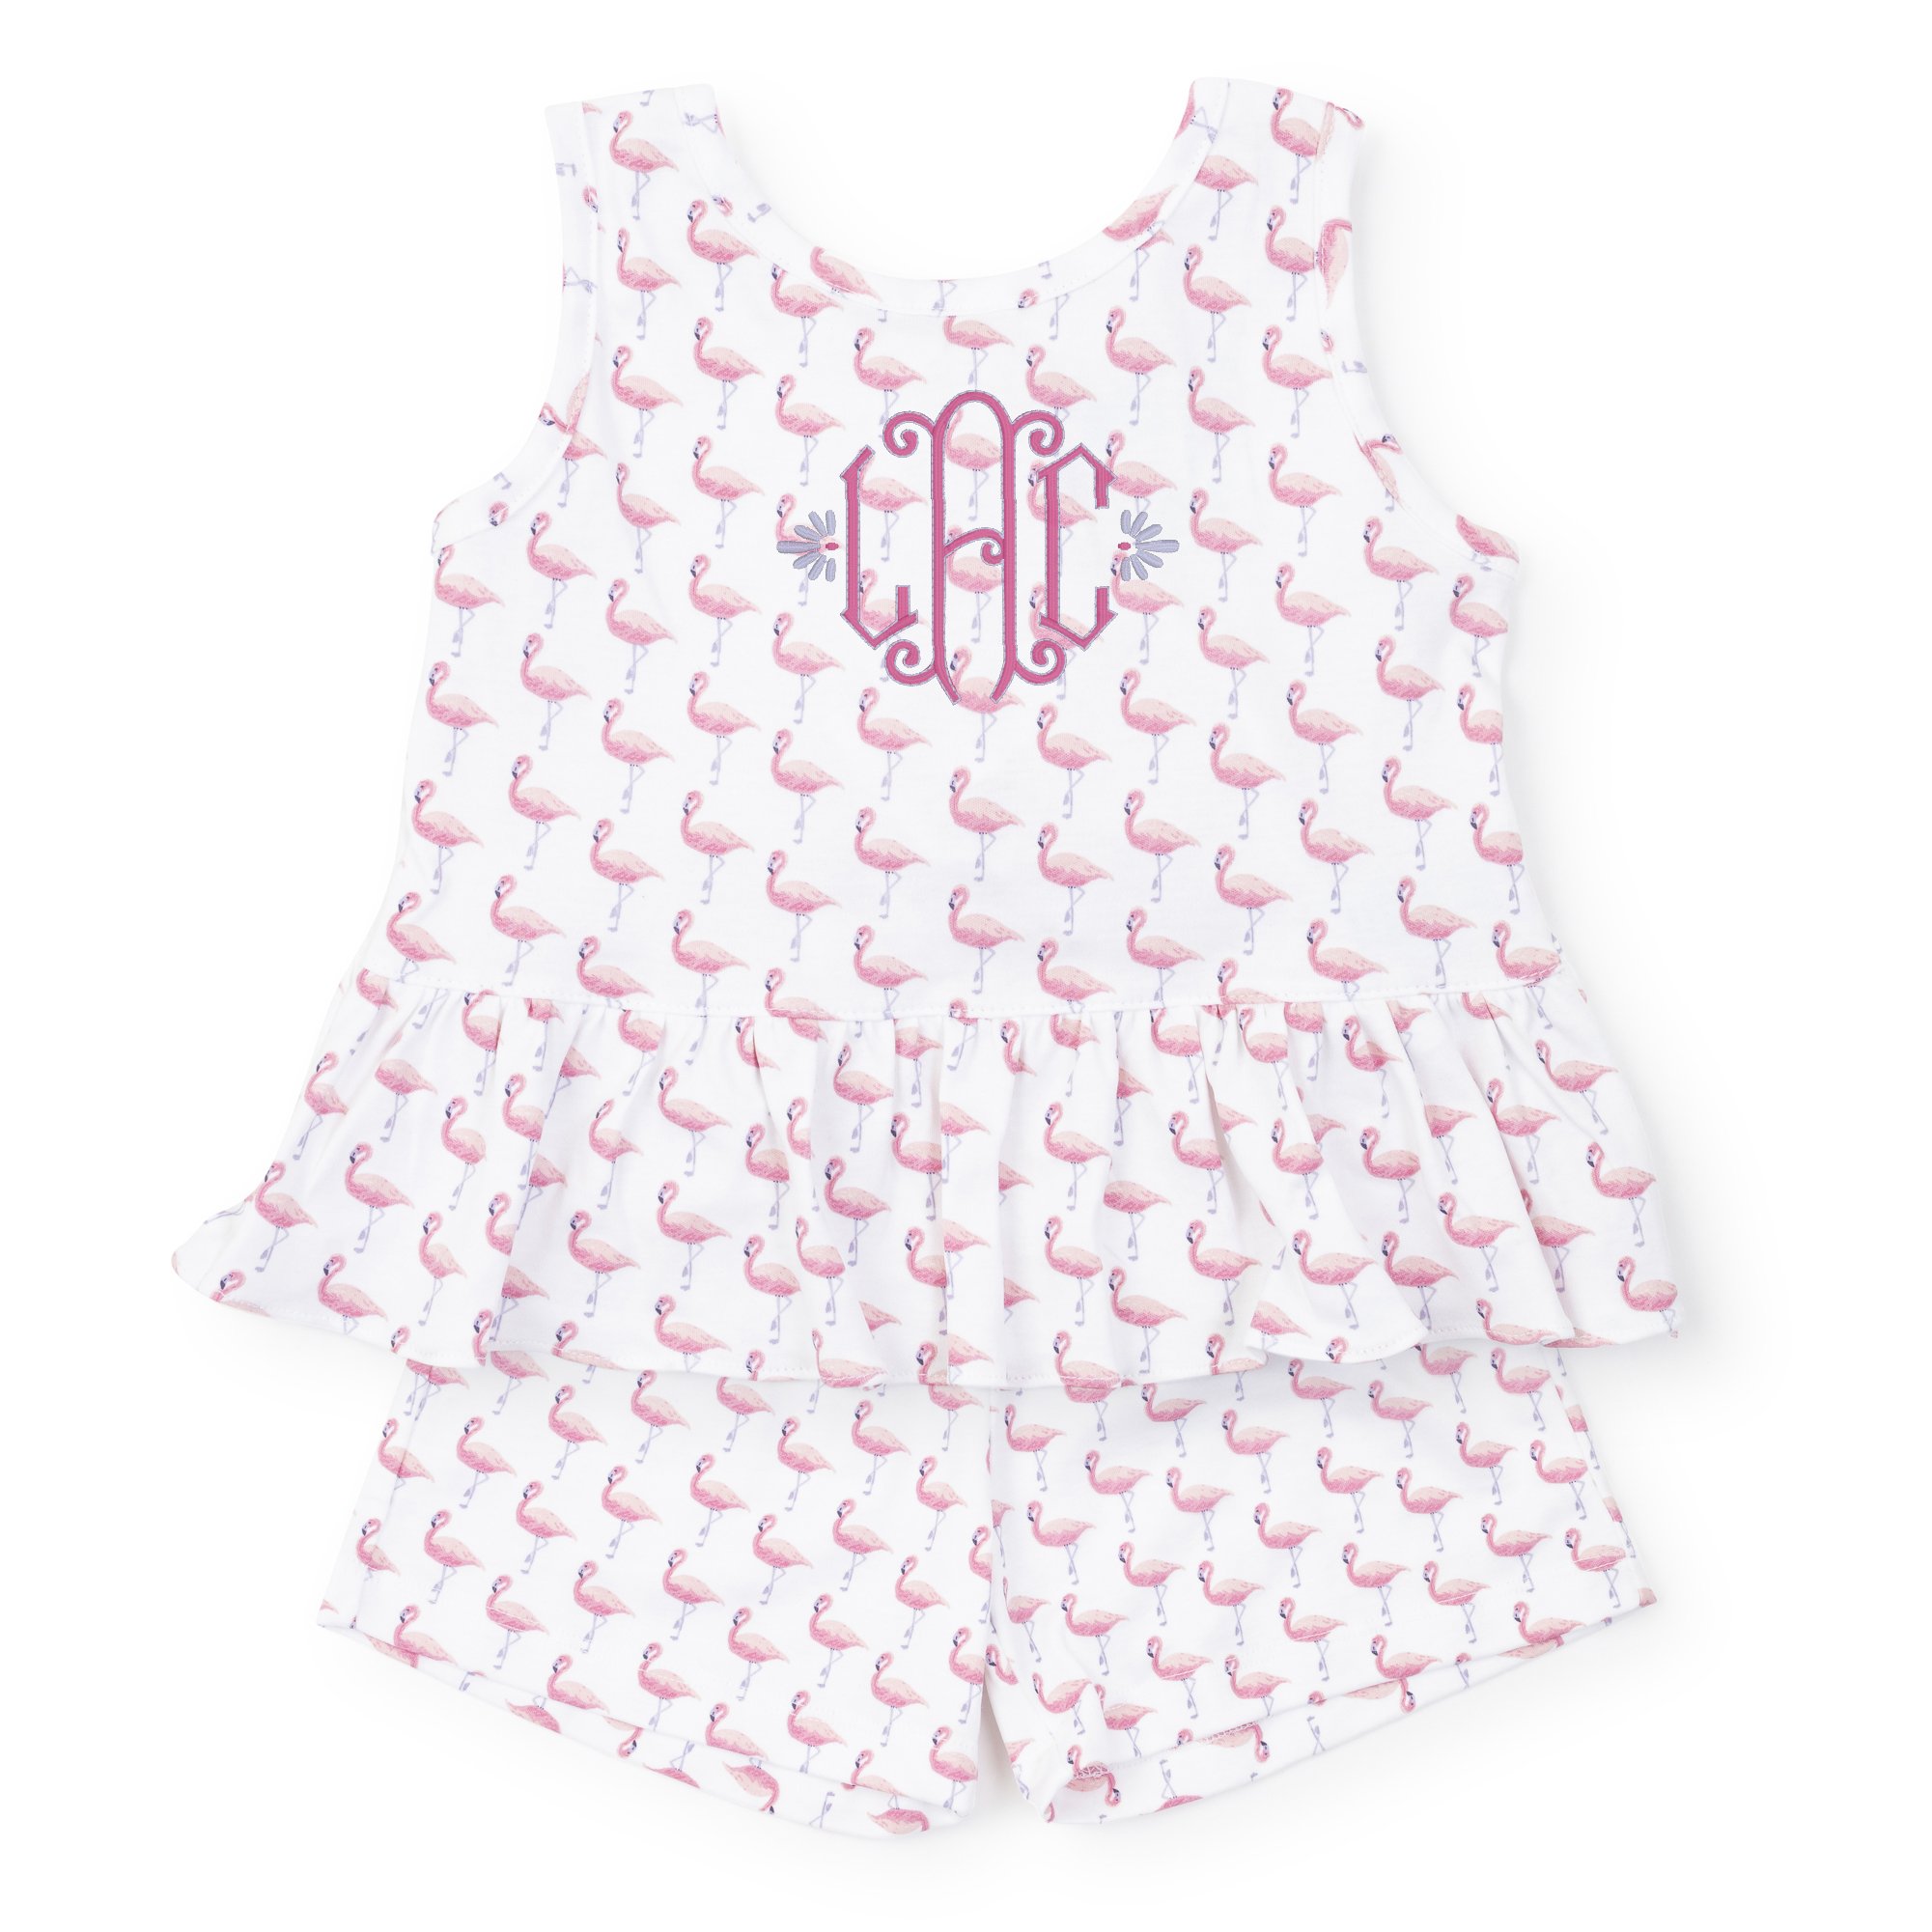 Poppy Girls' Pima Cotton Short Set - Fabulous Flamingos